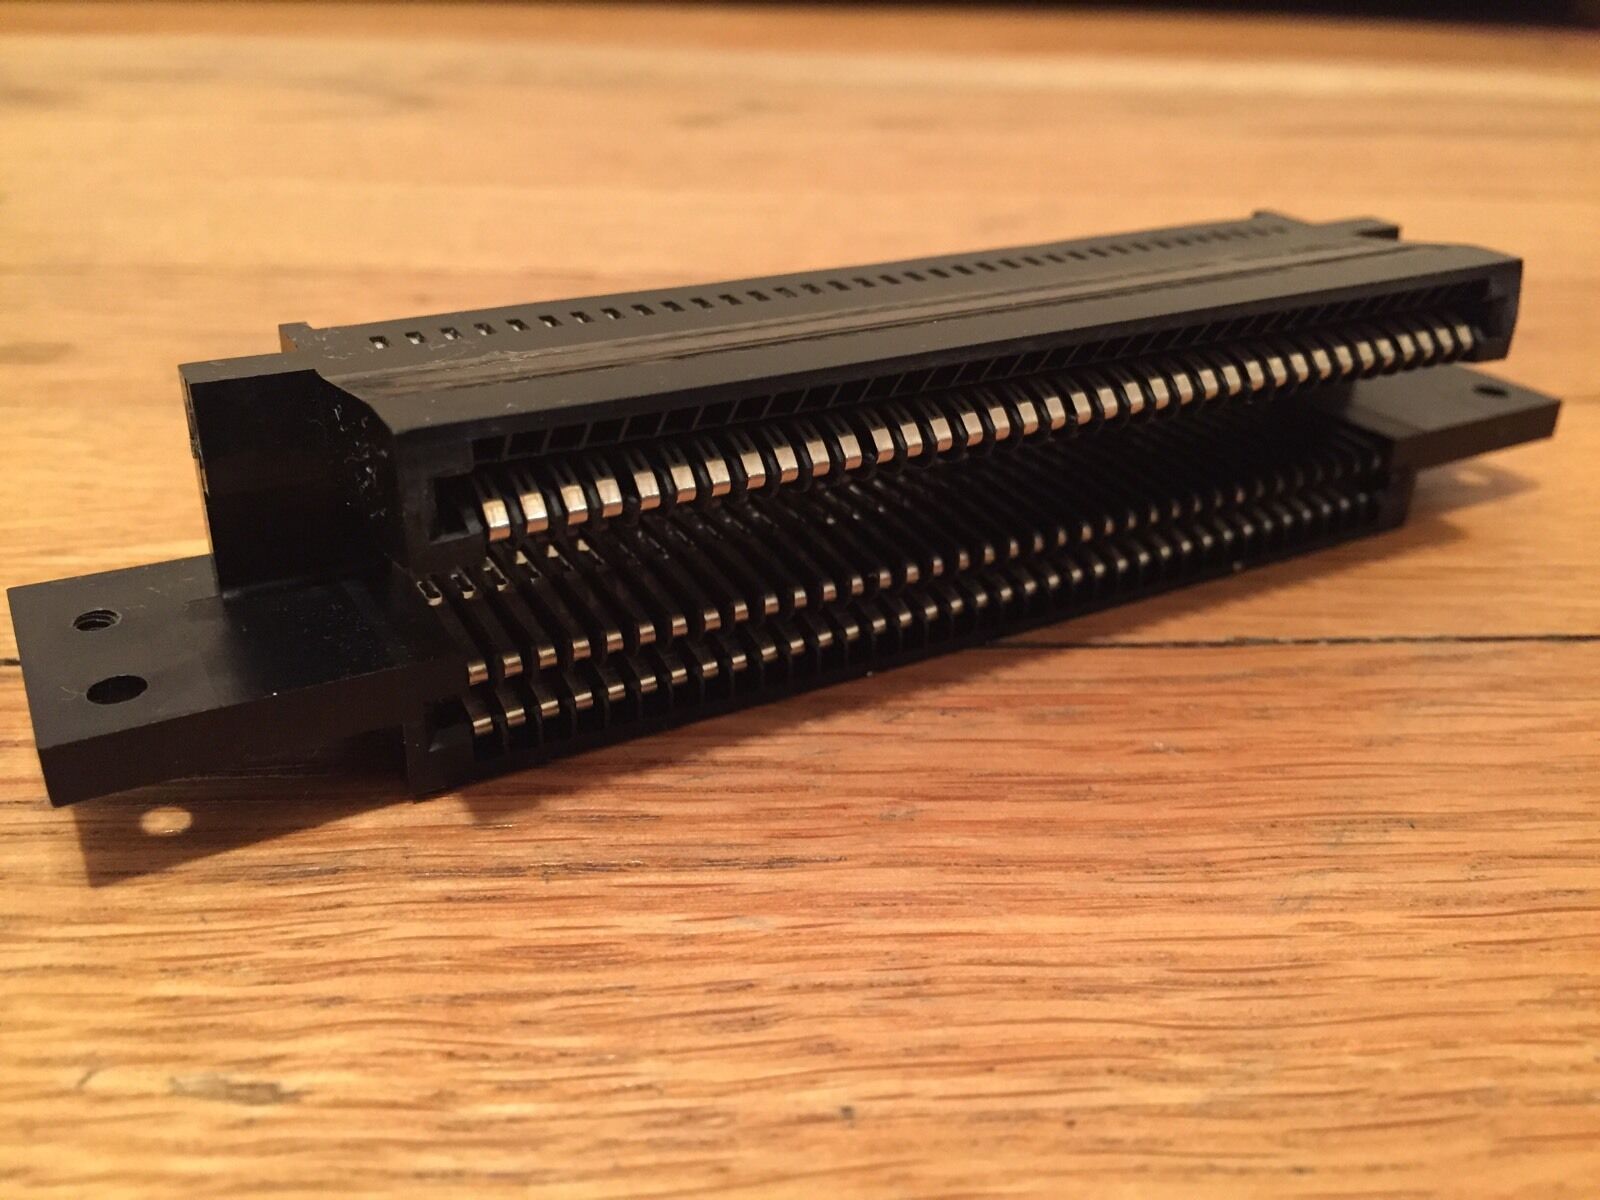 Original Oem Nintendo Nes 72 Pin Connector Refurbished Polished No Death Grip